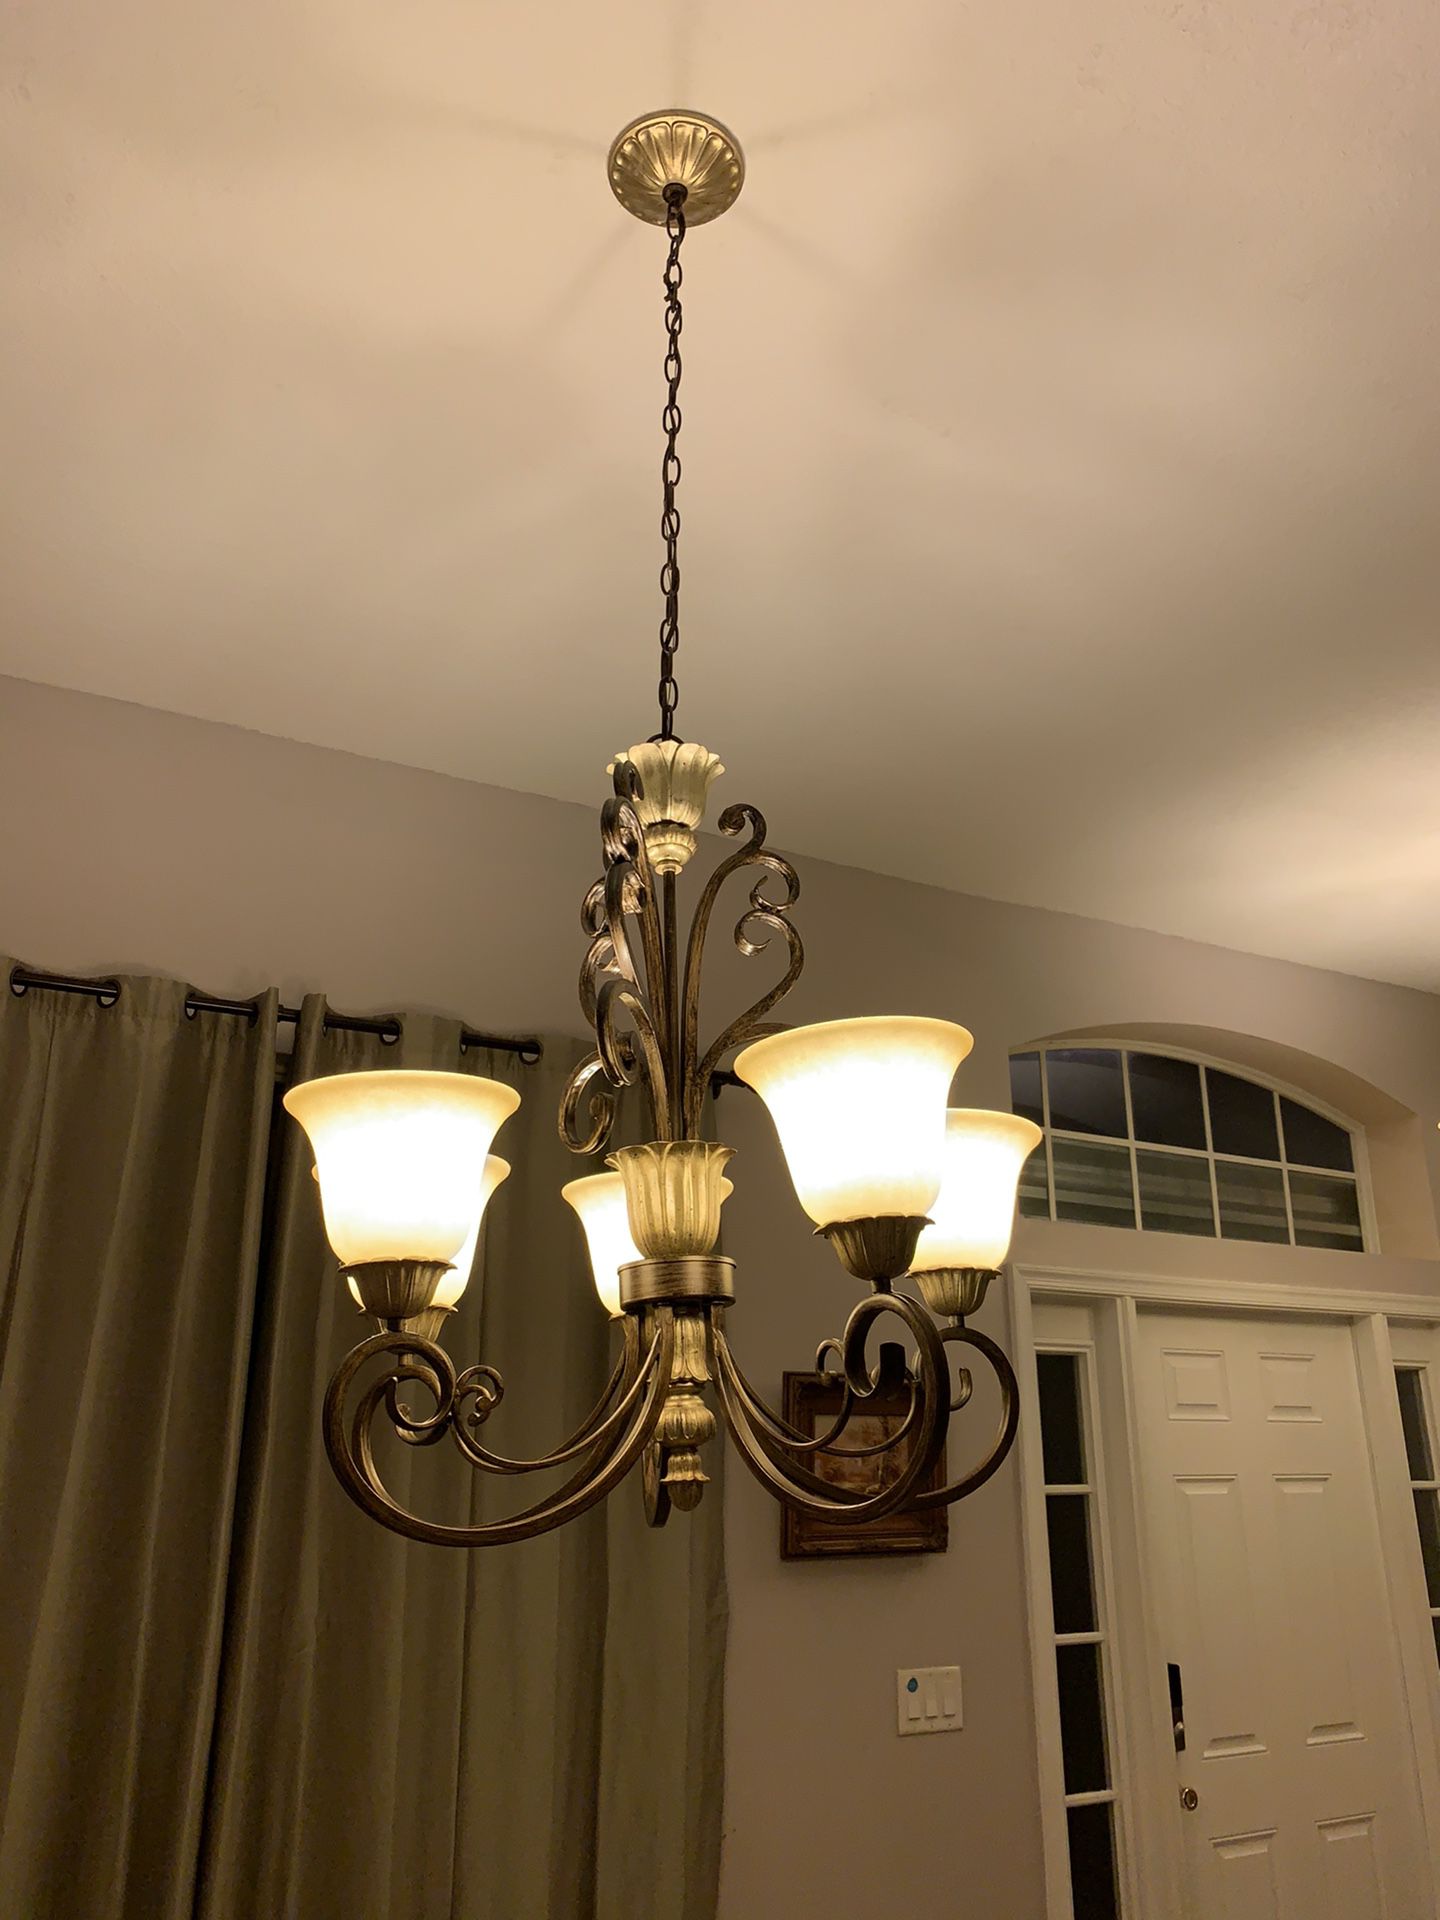 2 beautiful chandeliers